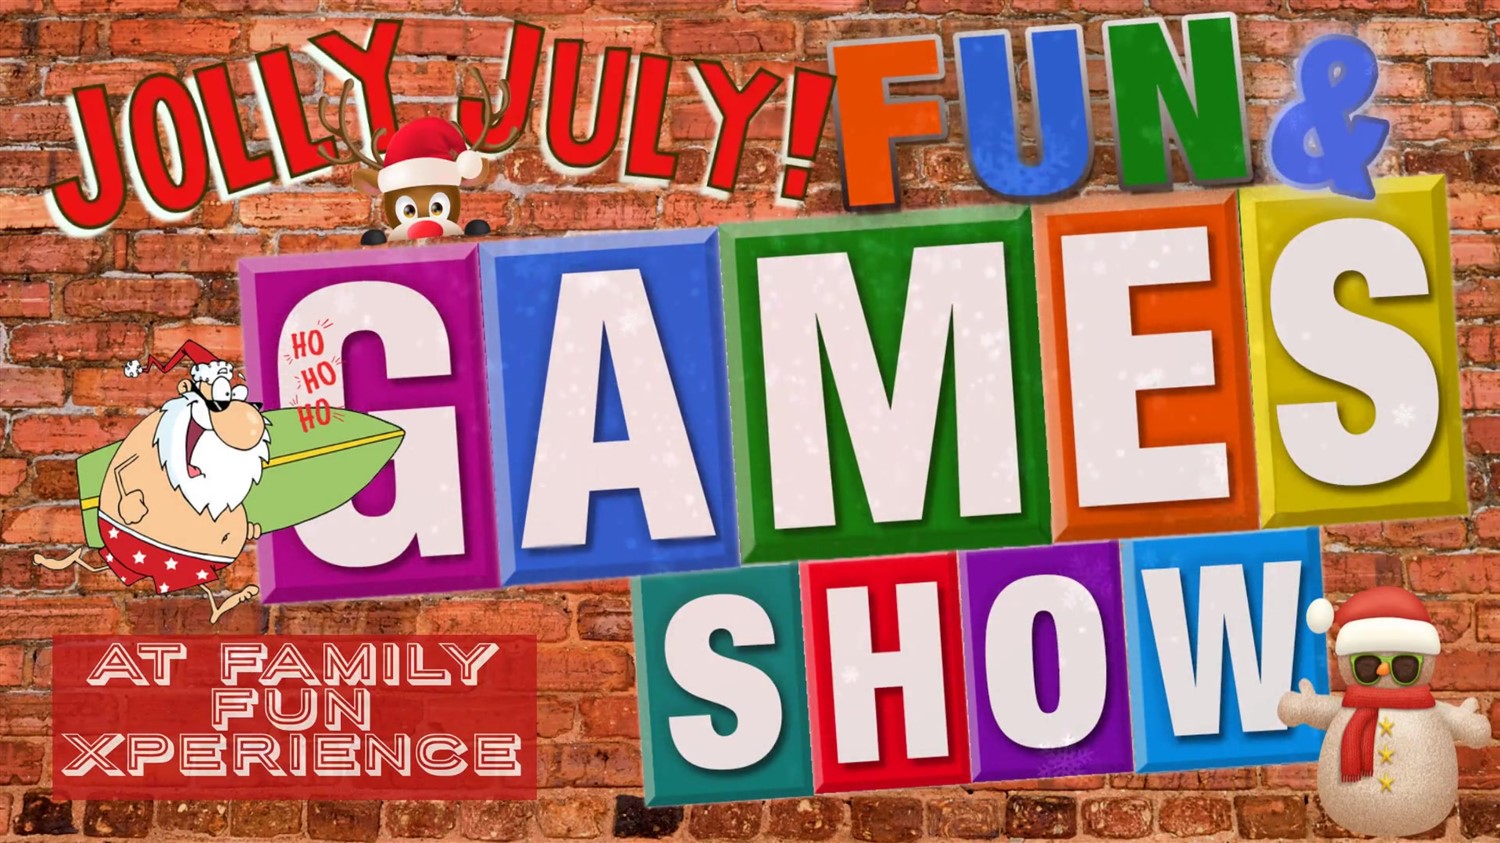 Jolly July Edition - FUN & GAMES SHOW! 5 Star Fun for the whole family! on juil. 26, 19:00@FFX Theatre - Choisissez un siège,Achetez des billets et obtenez des informations surFamily Fun Xperience tickets.ffxshow.org